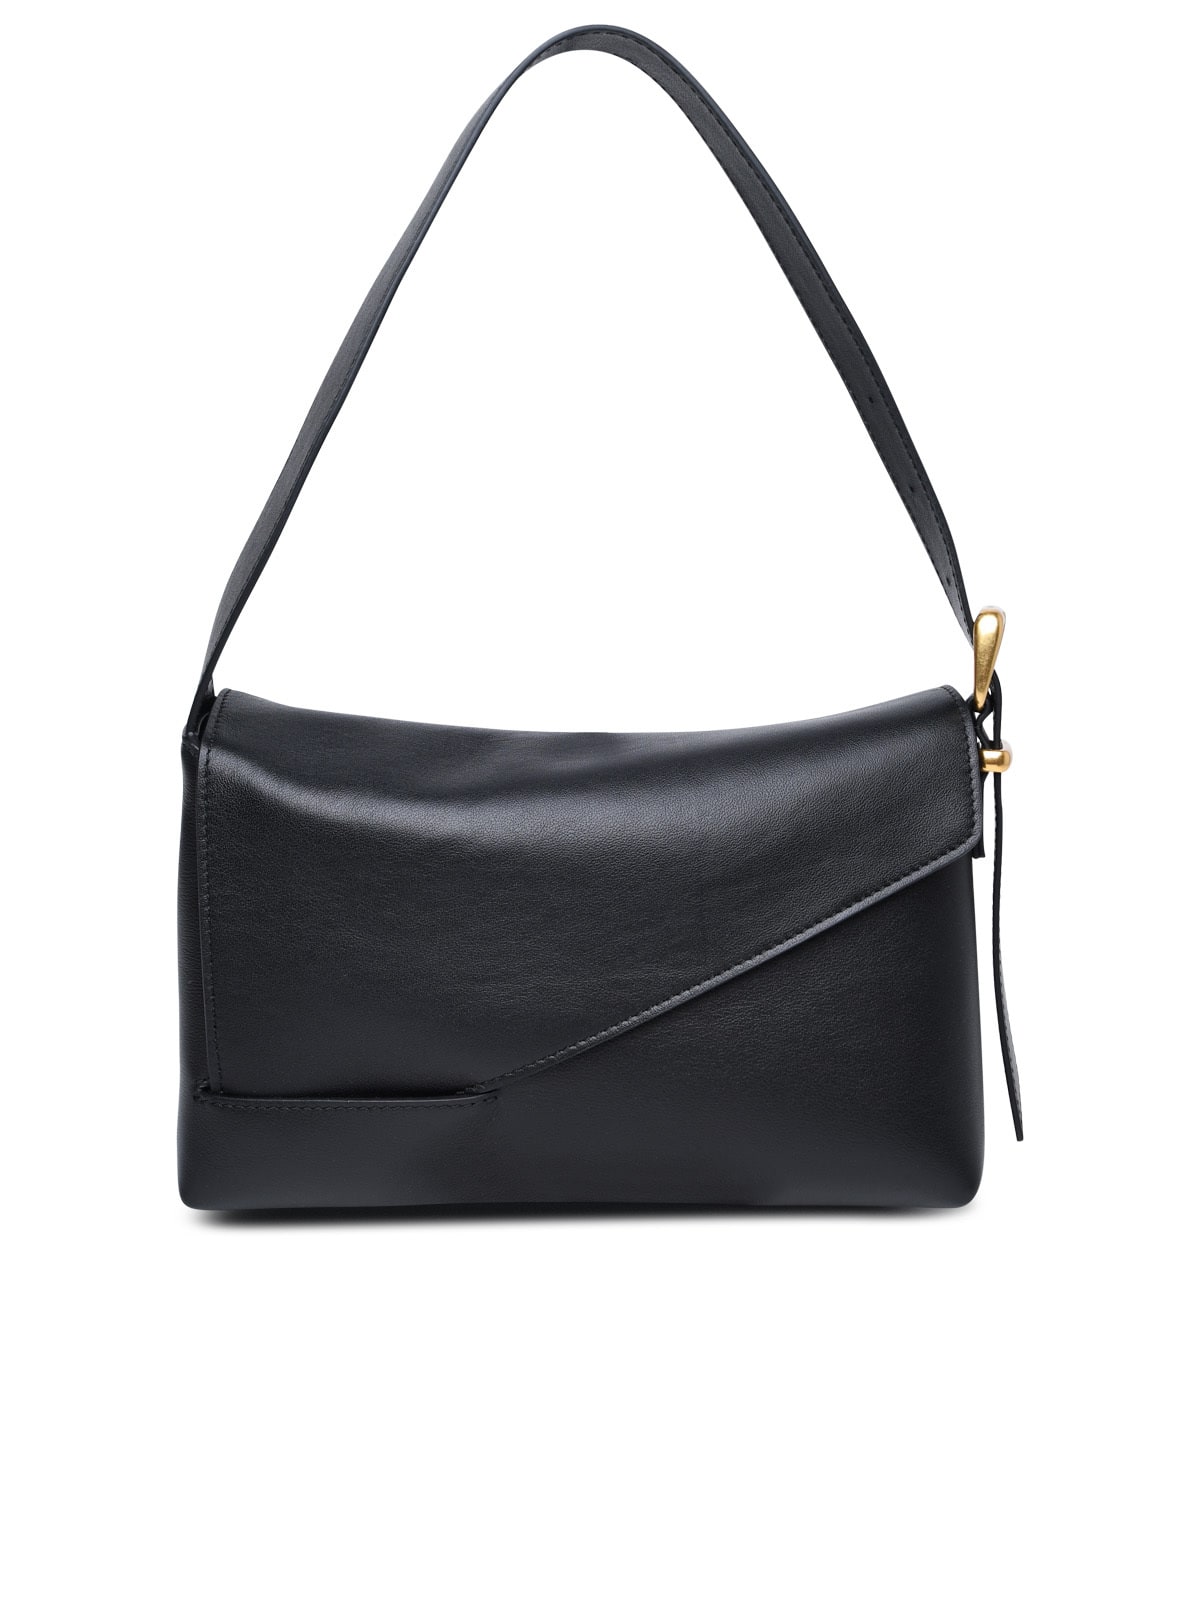 oscar Baguette Black Calf Leather Bag